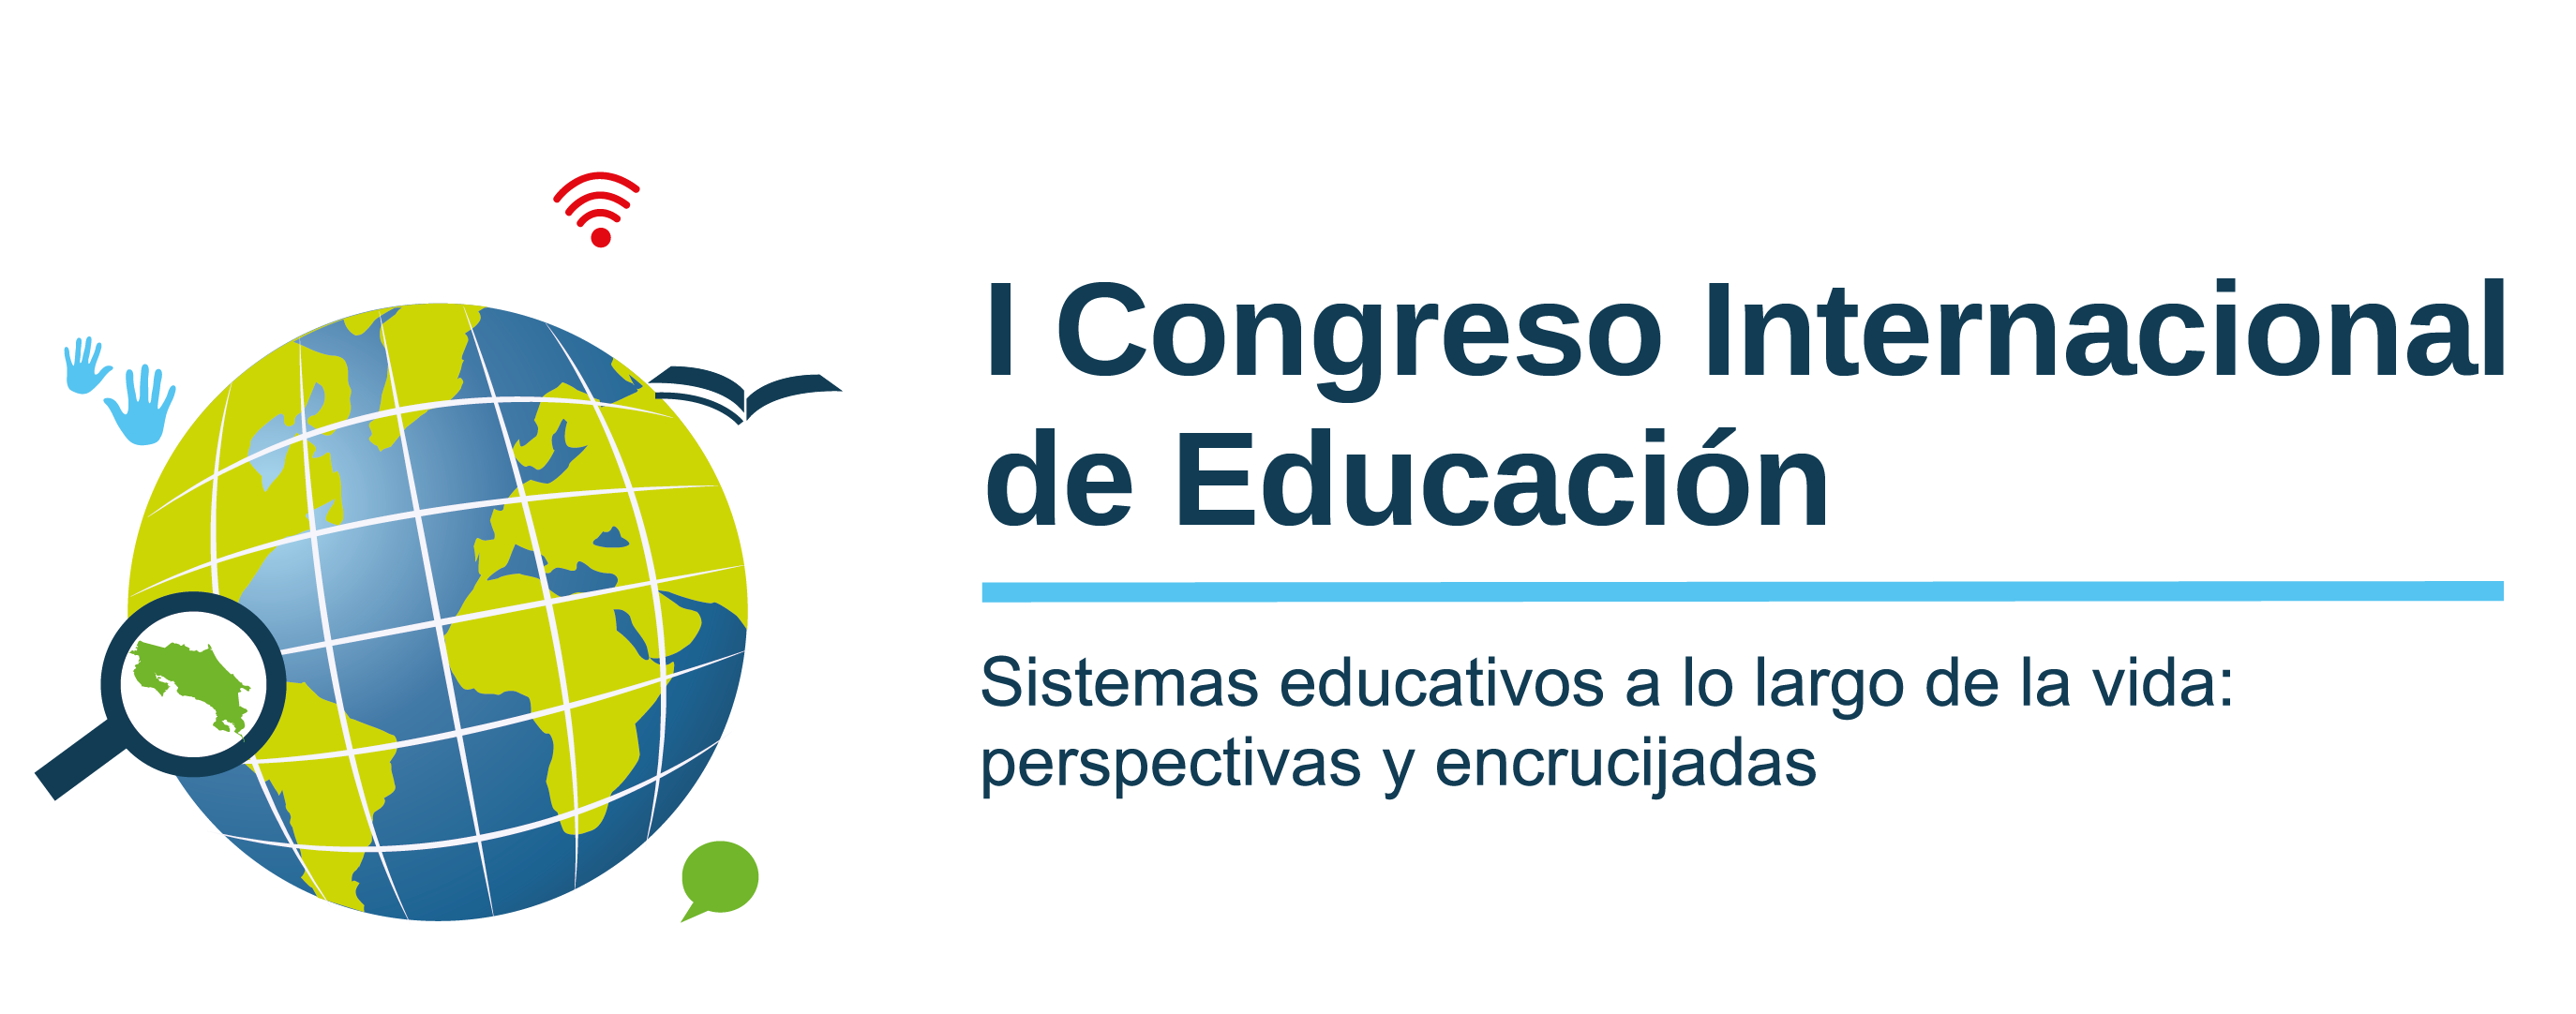 Congreso Internacional de Educación